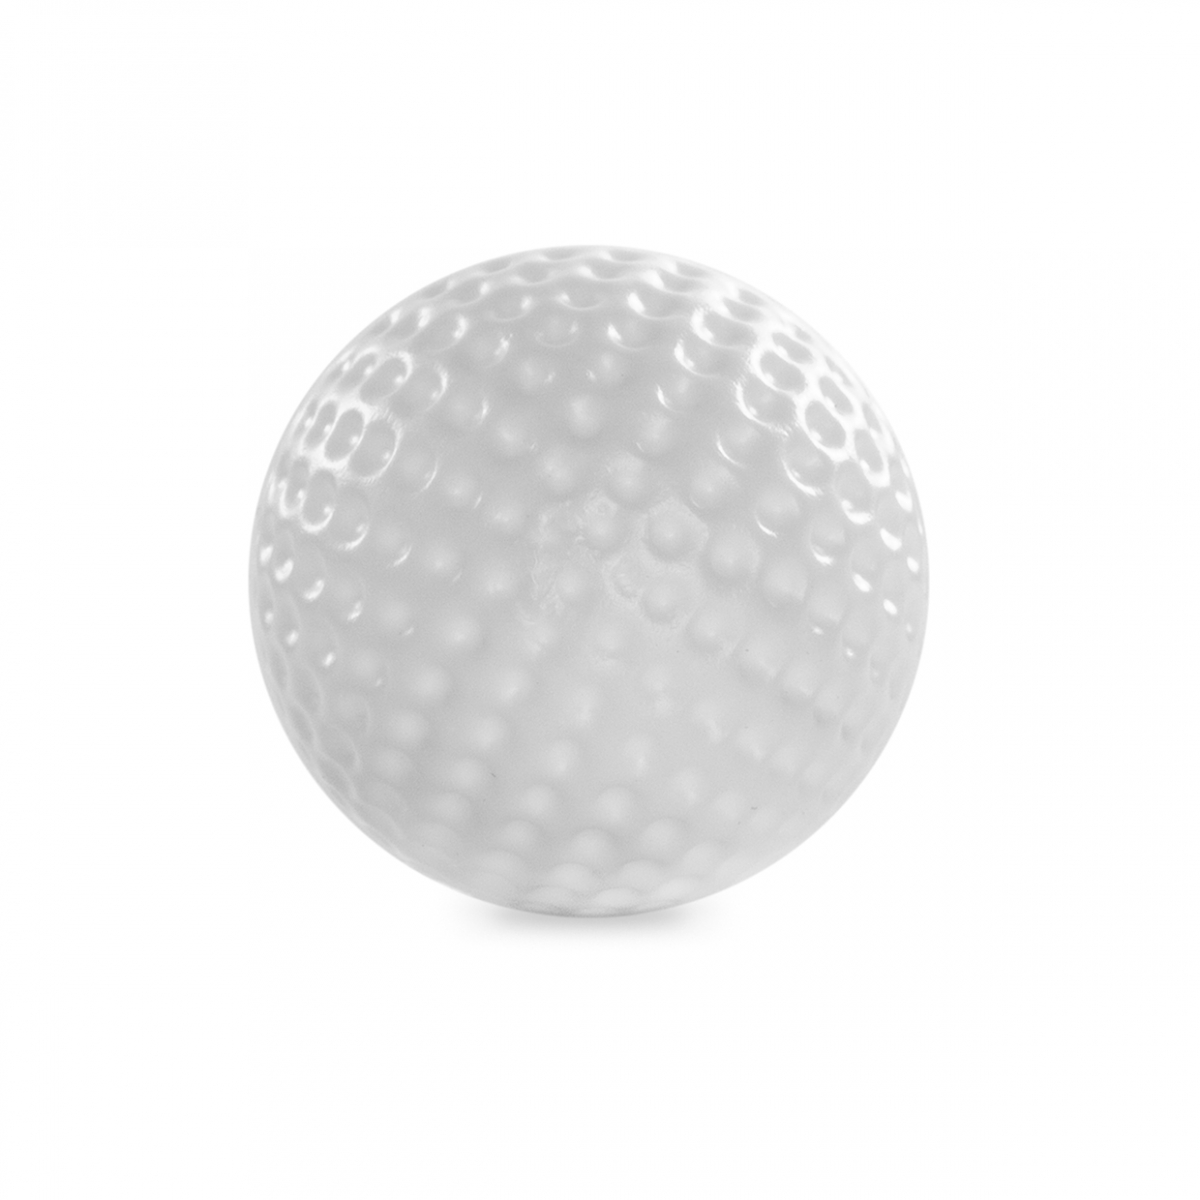 Imagen en la que se ve una pelota de golf